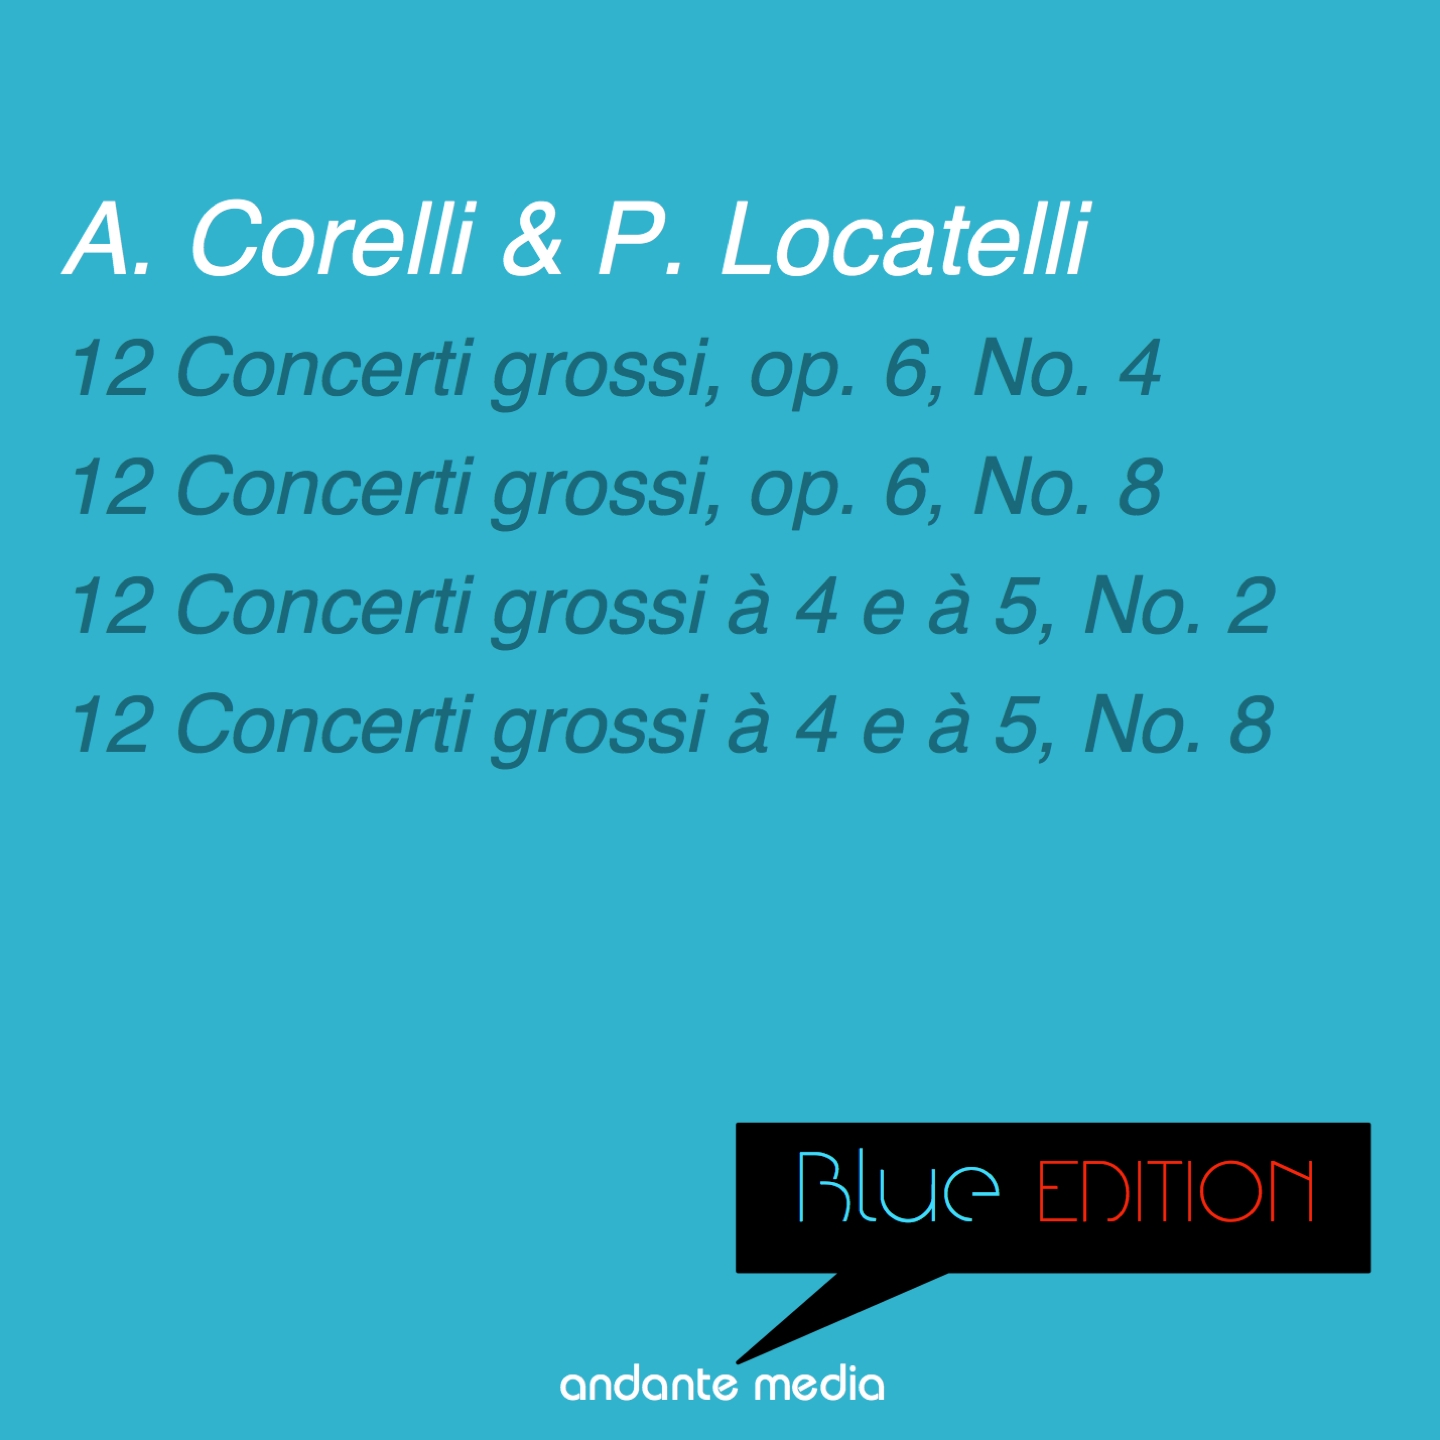 Blue Edition  Corelli  Locatelli: 12 Concerti grossi, op. 6, Nos. 4, 8  12 Concerti grossi a 4 e a 5, Nos. 2, 8